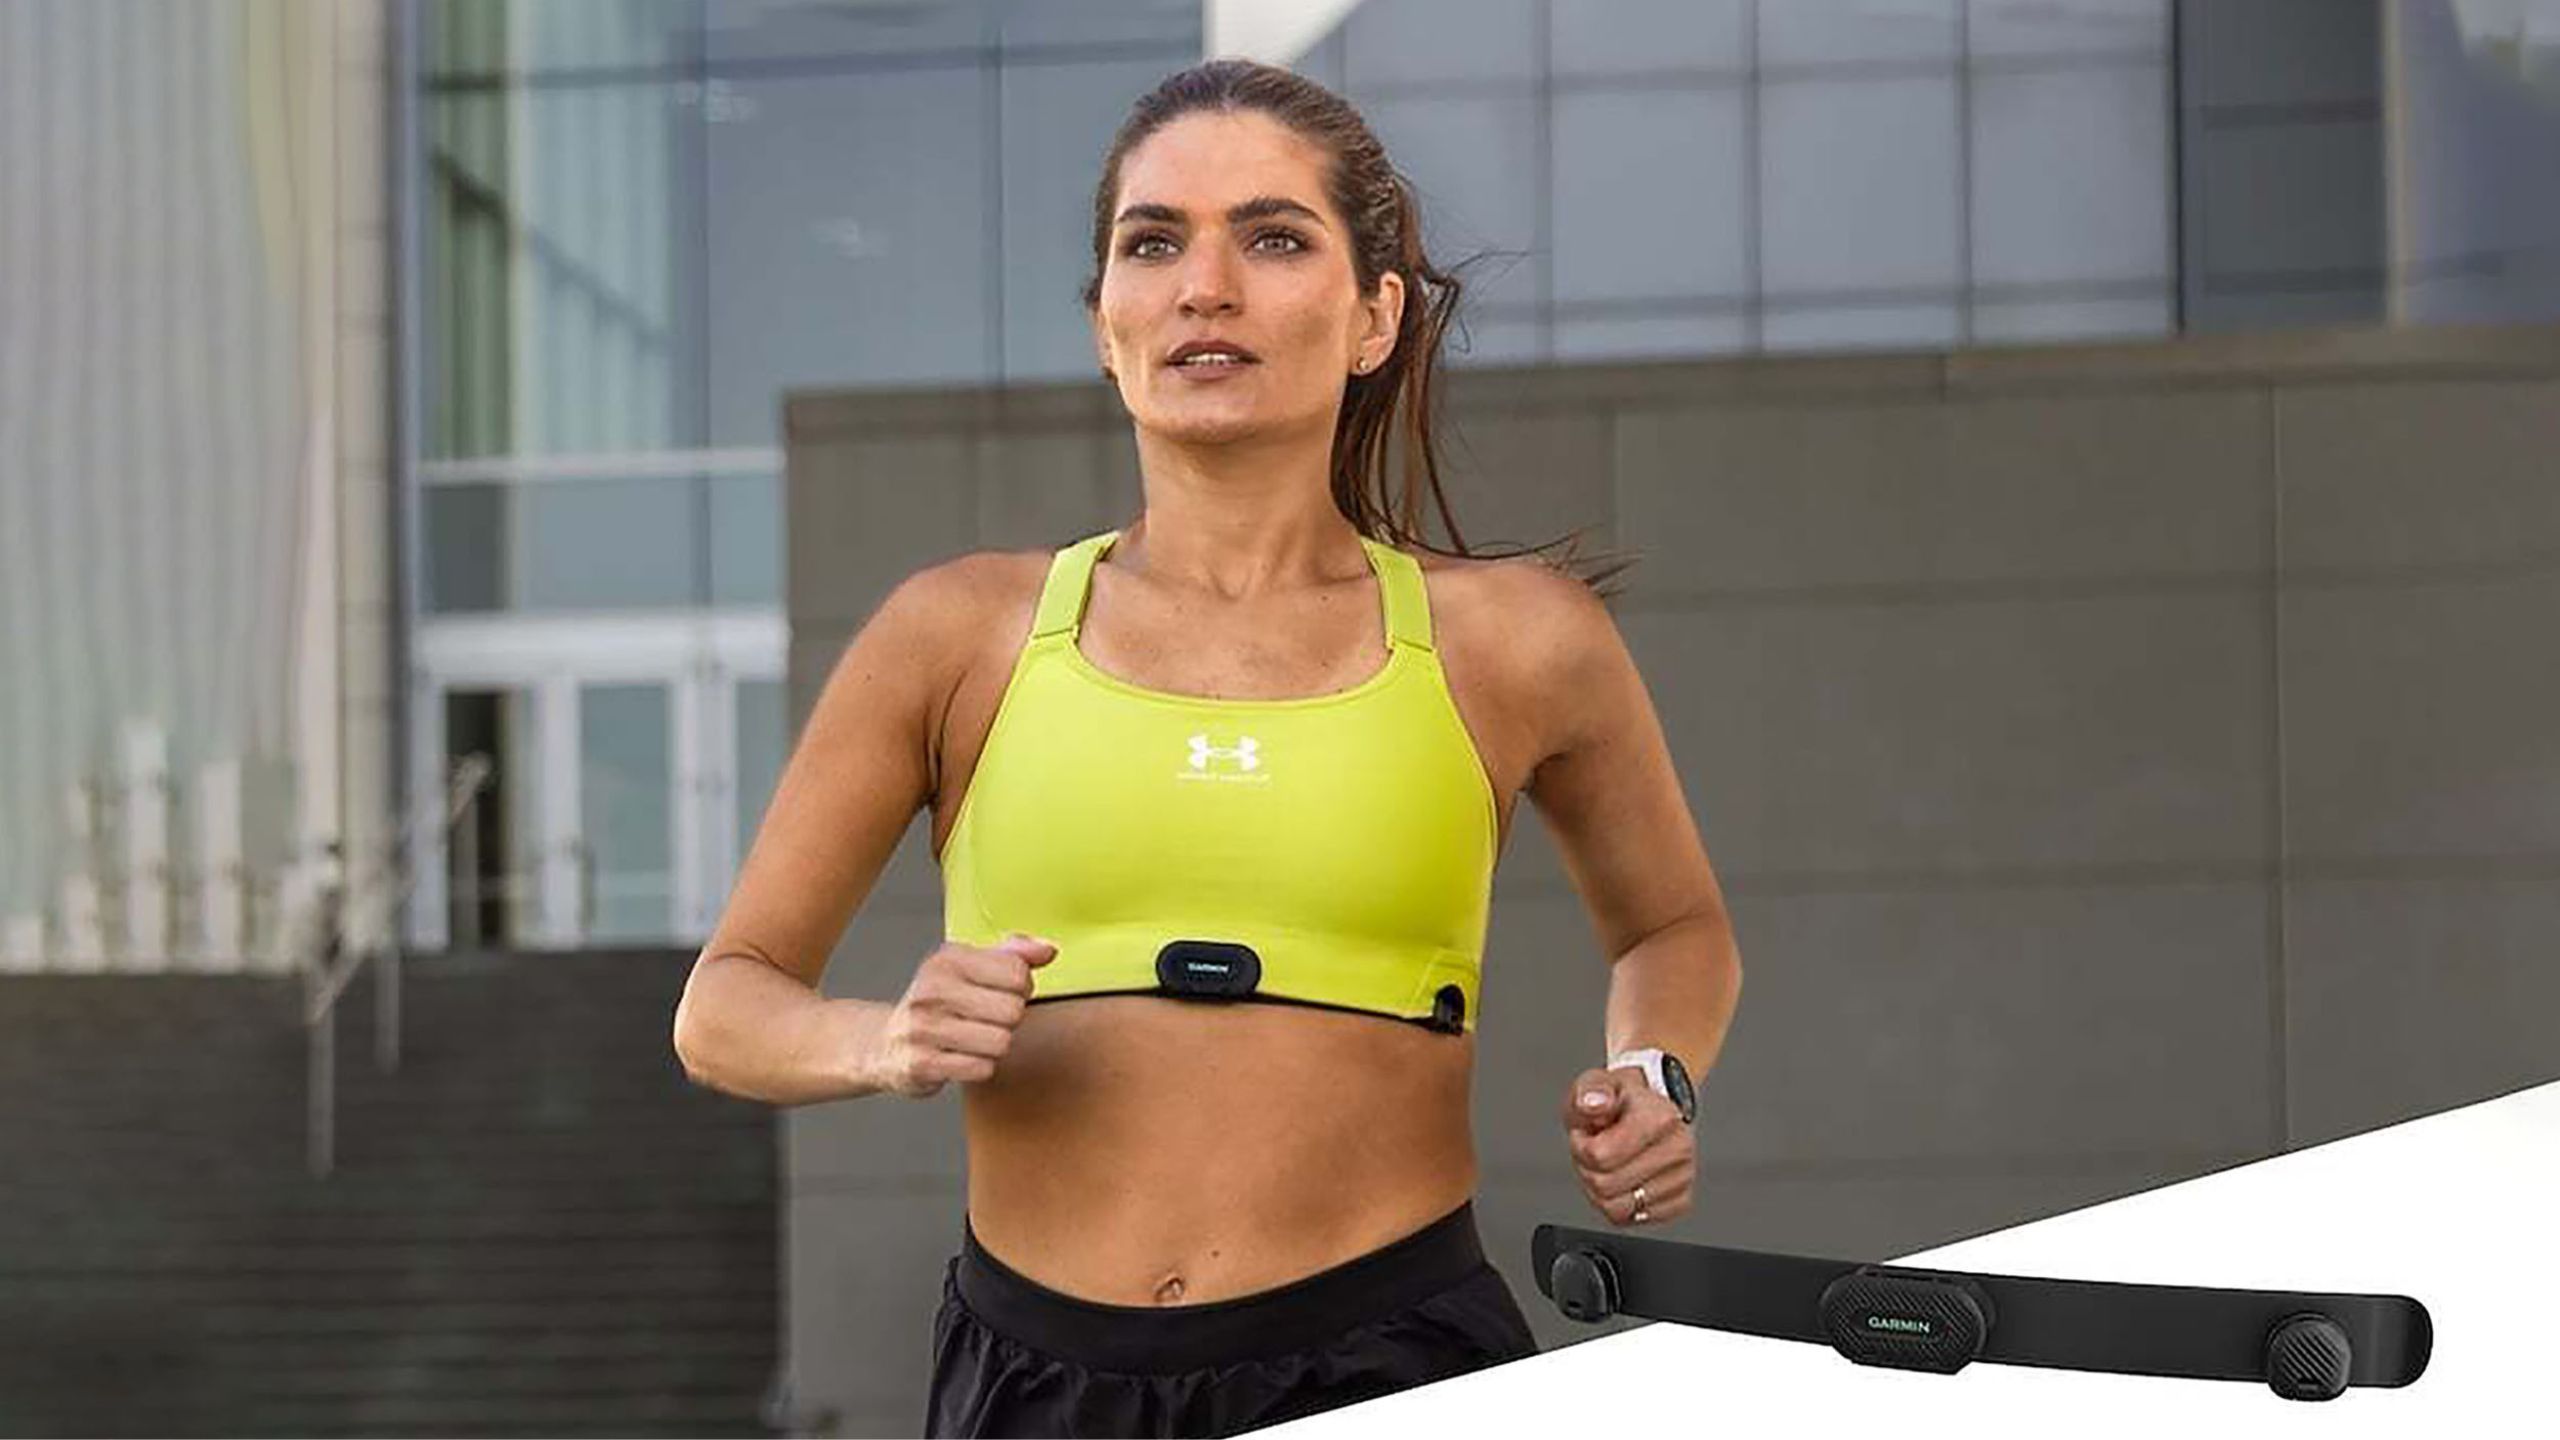 Garmin HRM sports bra woman running